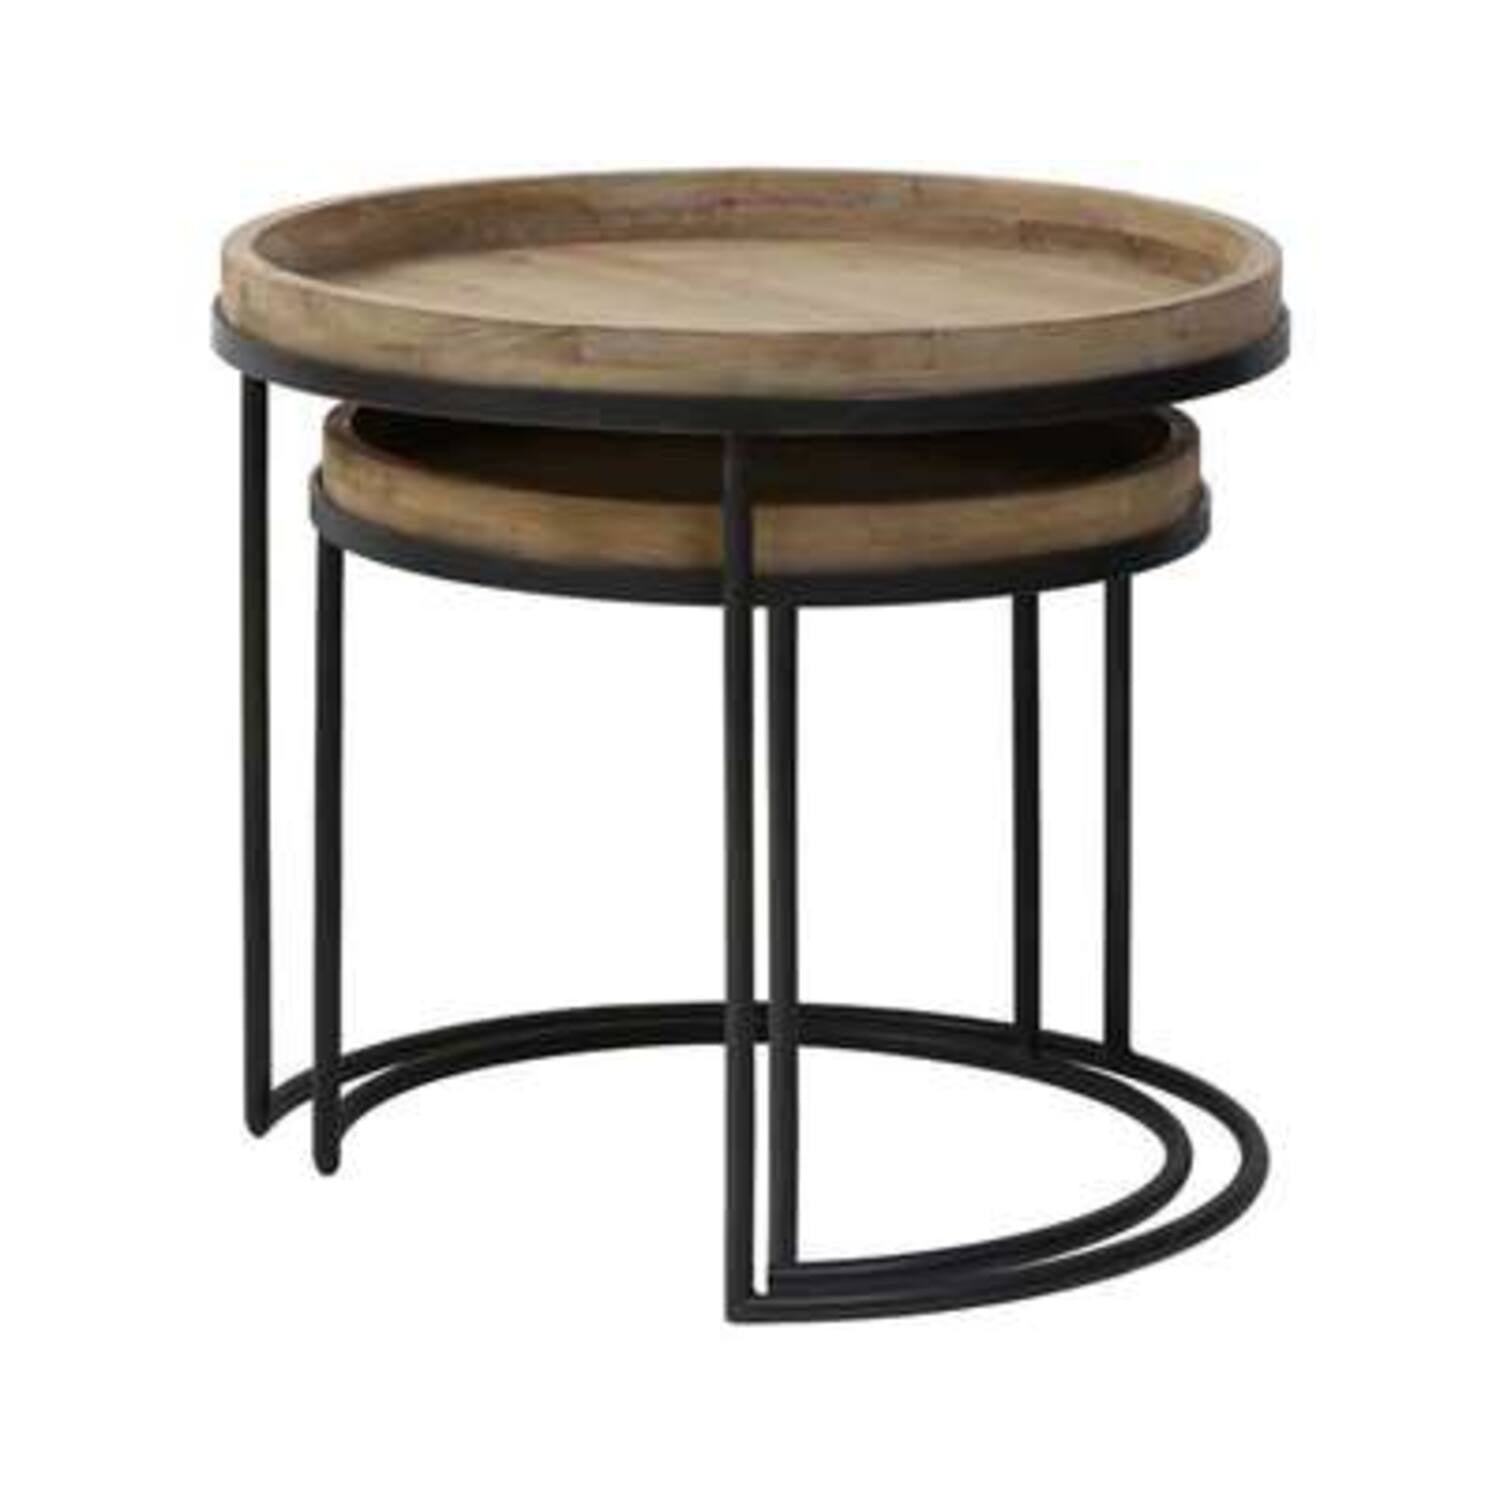 Copan Side table Black + Wood / Tin Look - Finish